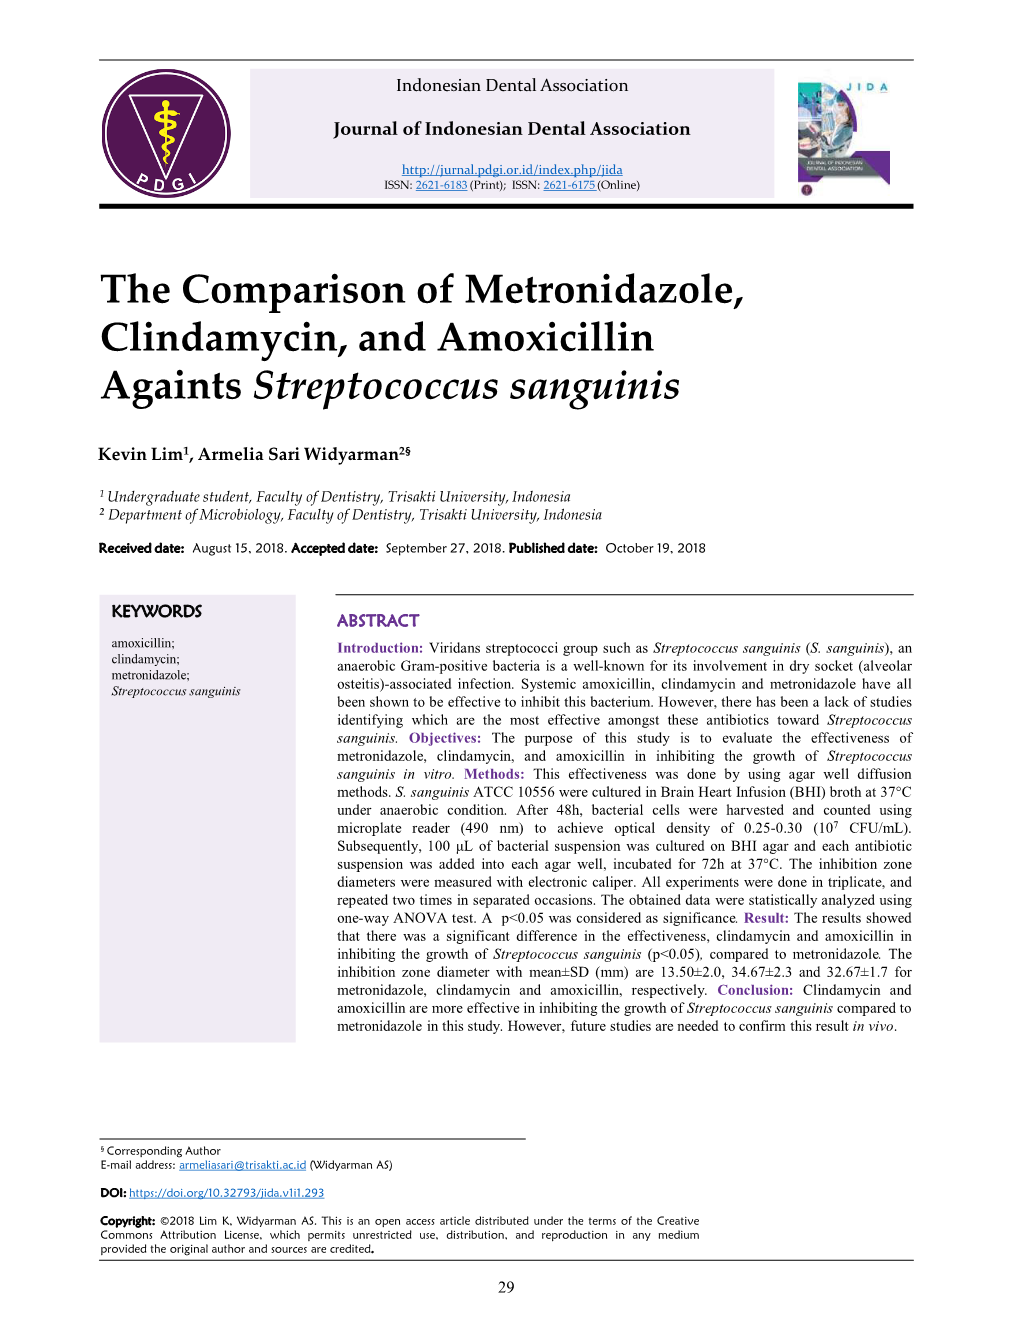 The Comparison of Metronidazole, Clindamycin, and Amoxicillin Againts Streptococcus Sanguinis